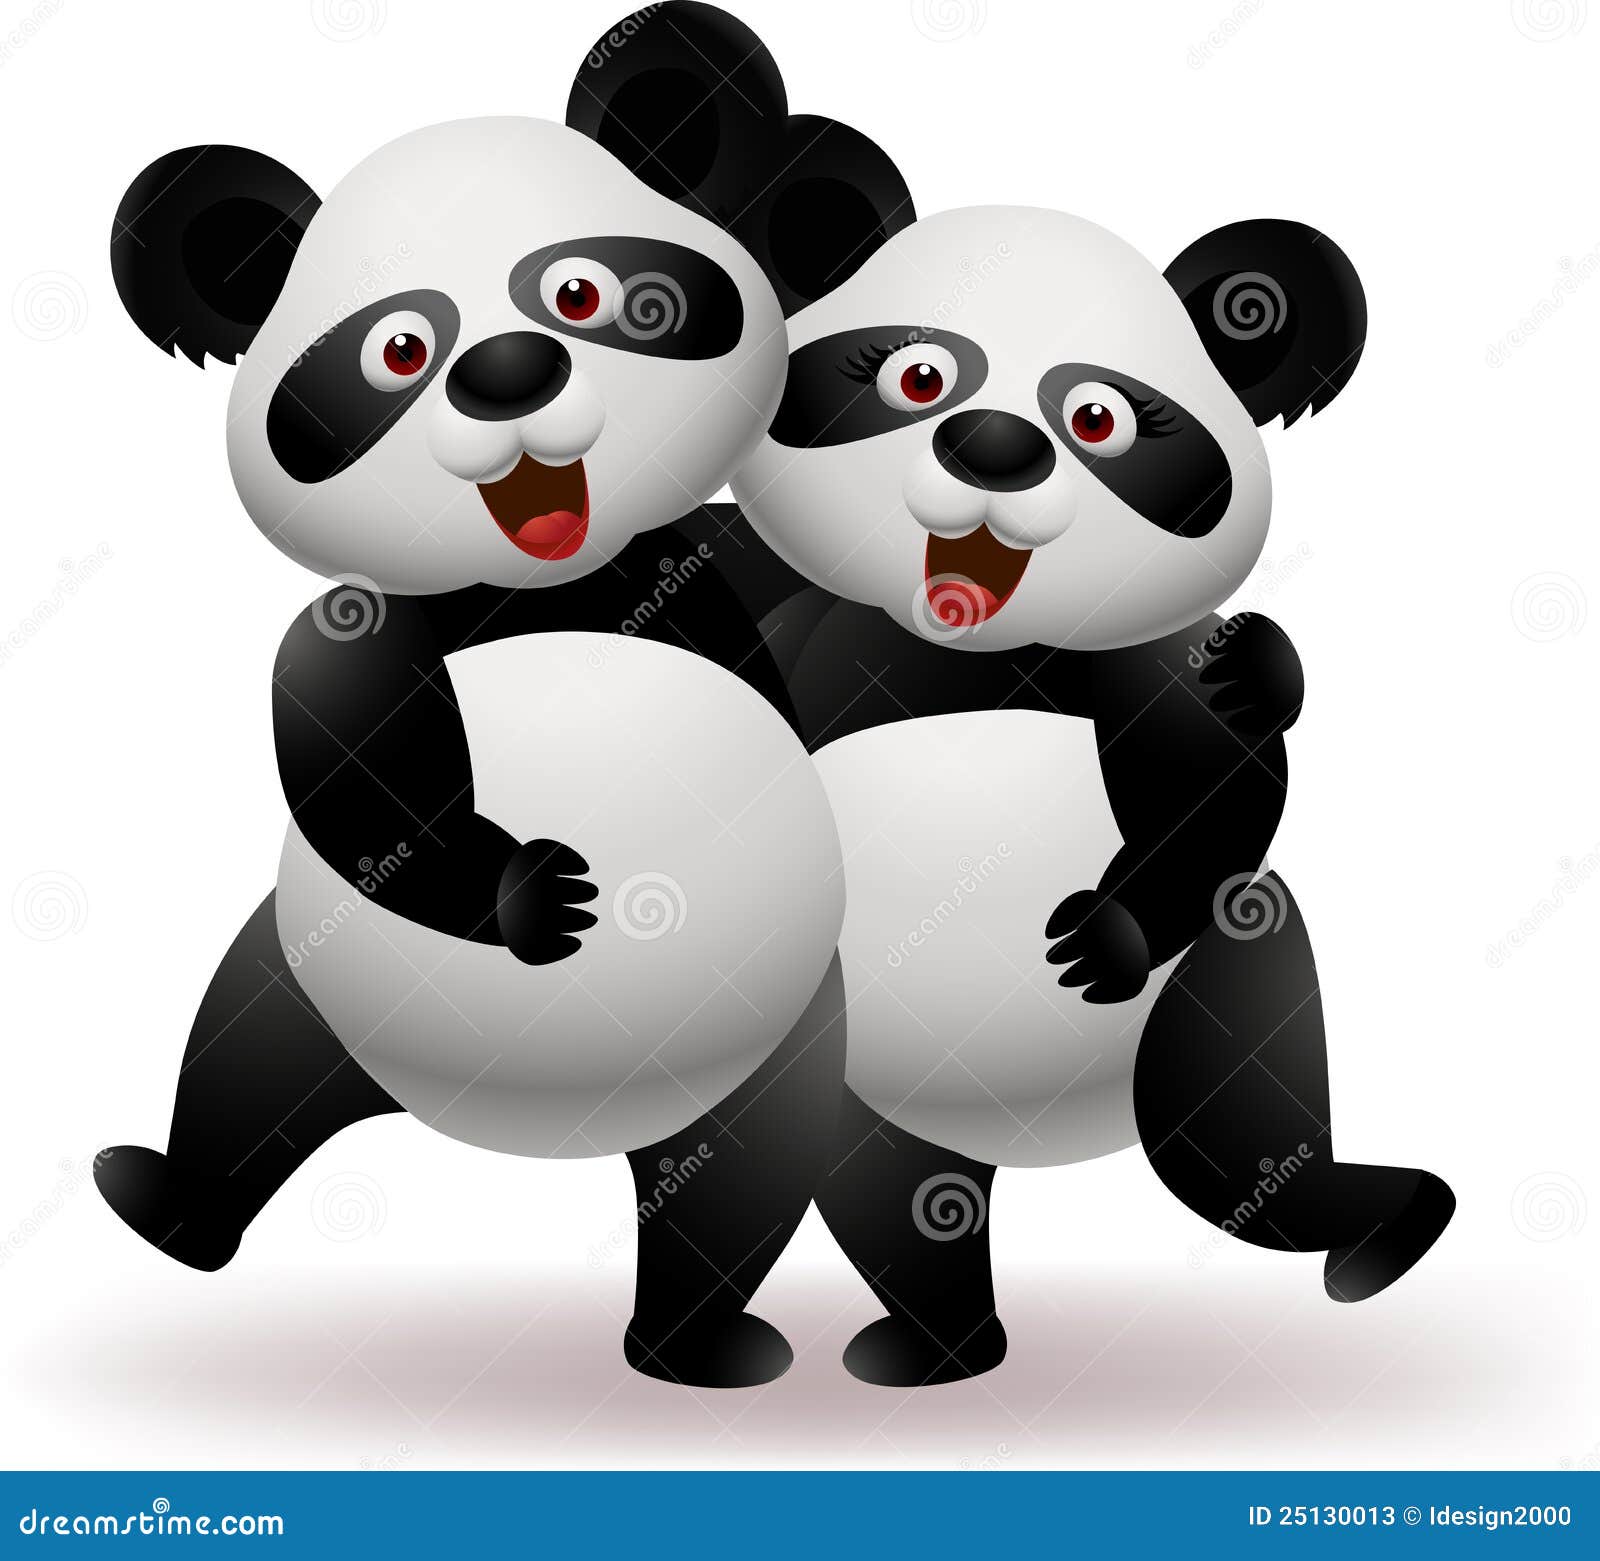 25 Terbaru Gambar Animasi Panda  Couple 